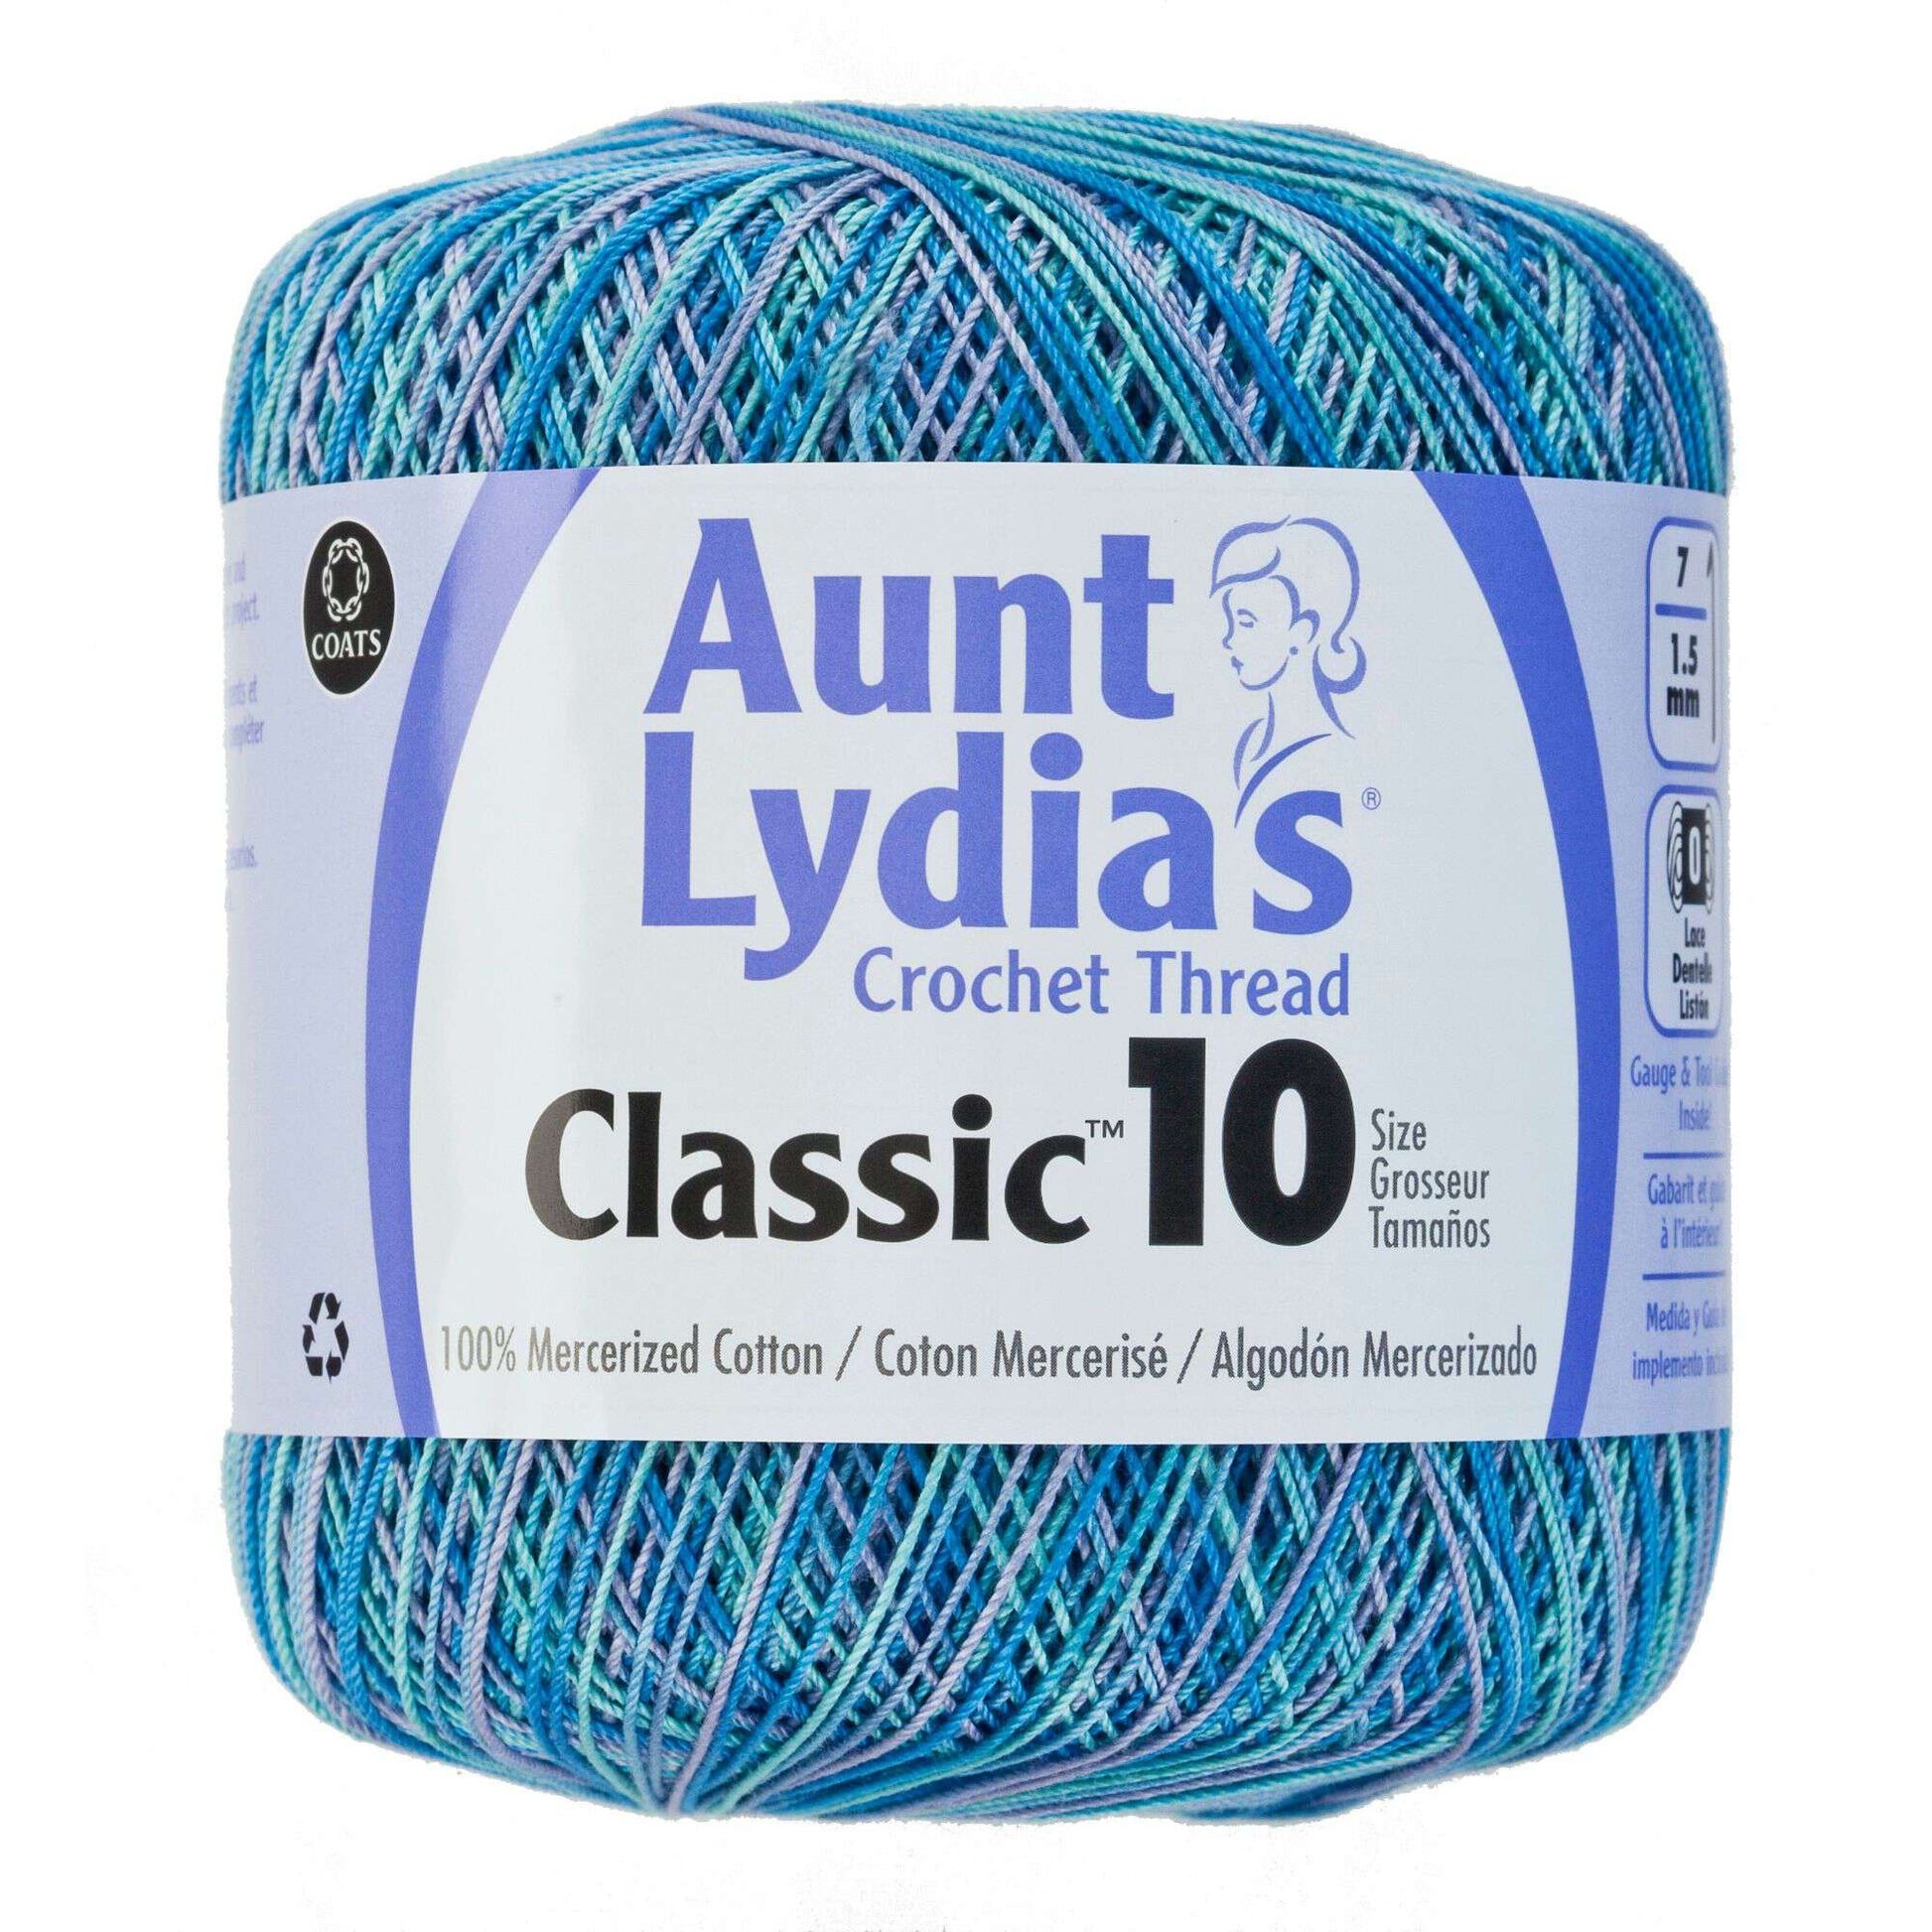 Aunt Lydia's Classic Crochet Thread Size 10 - Clearance shades Ocean